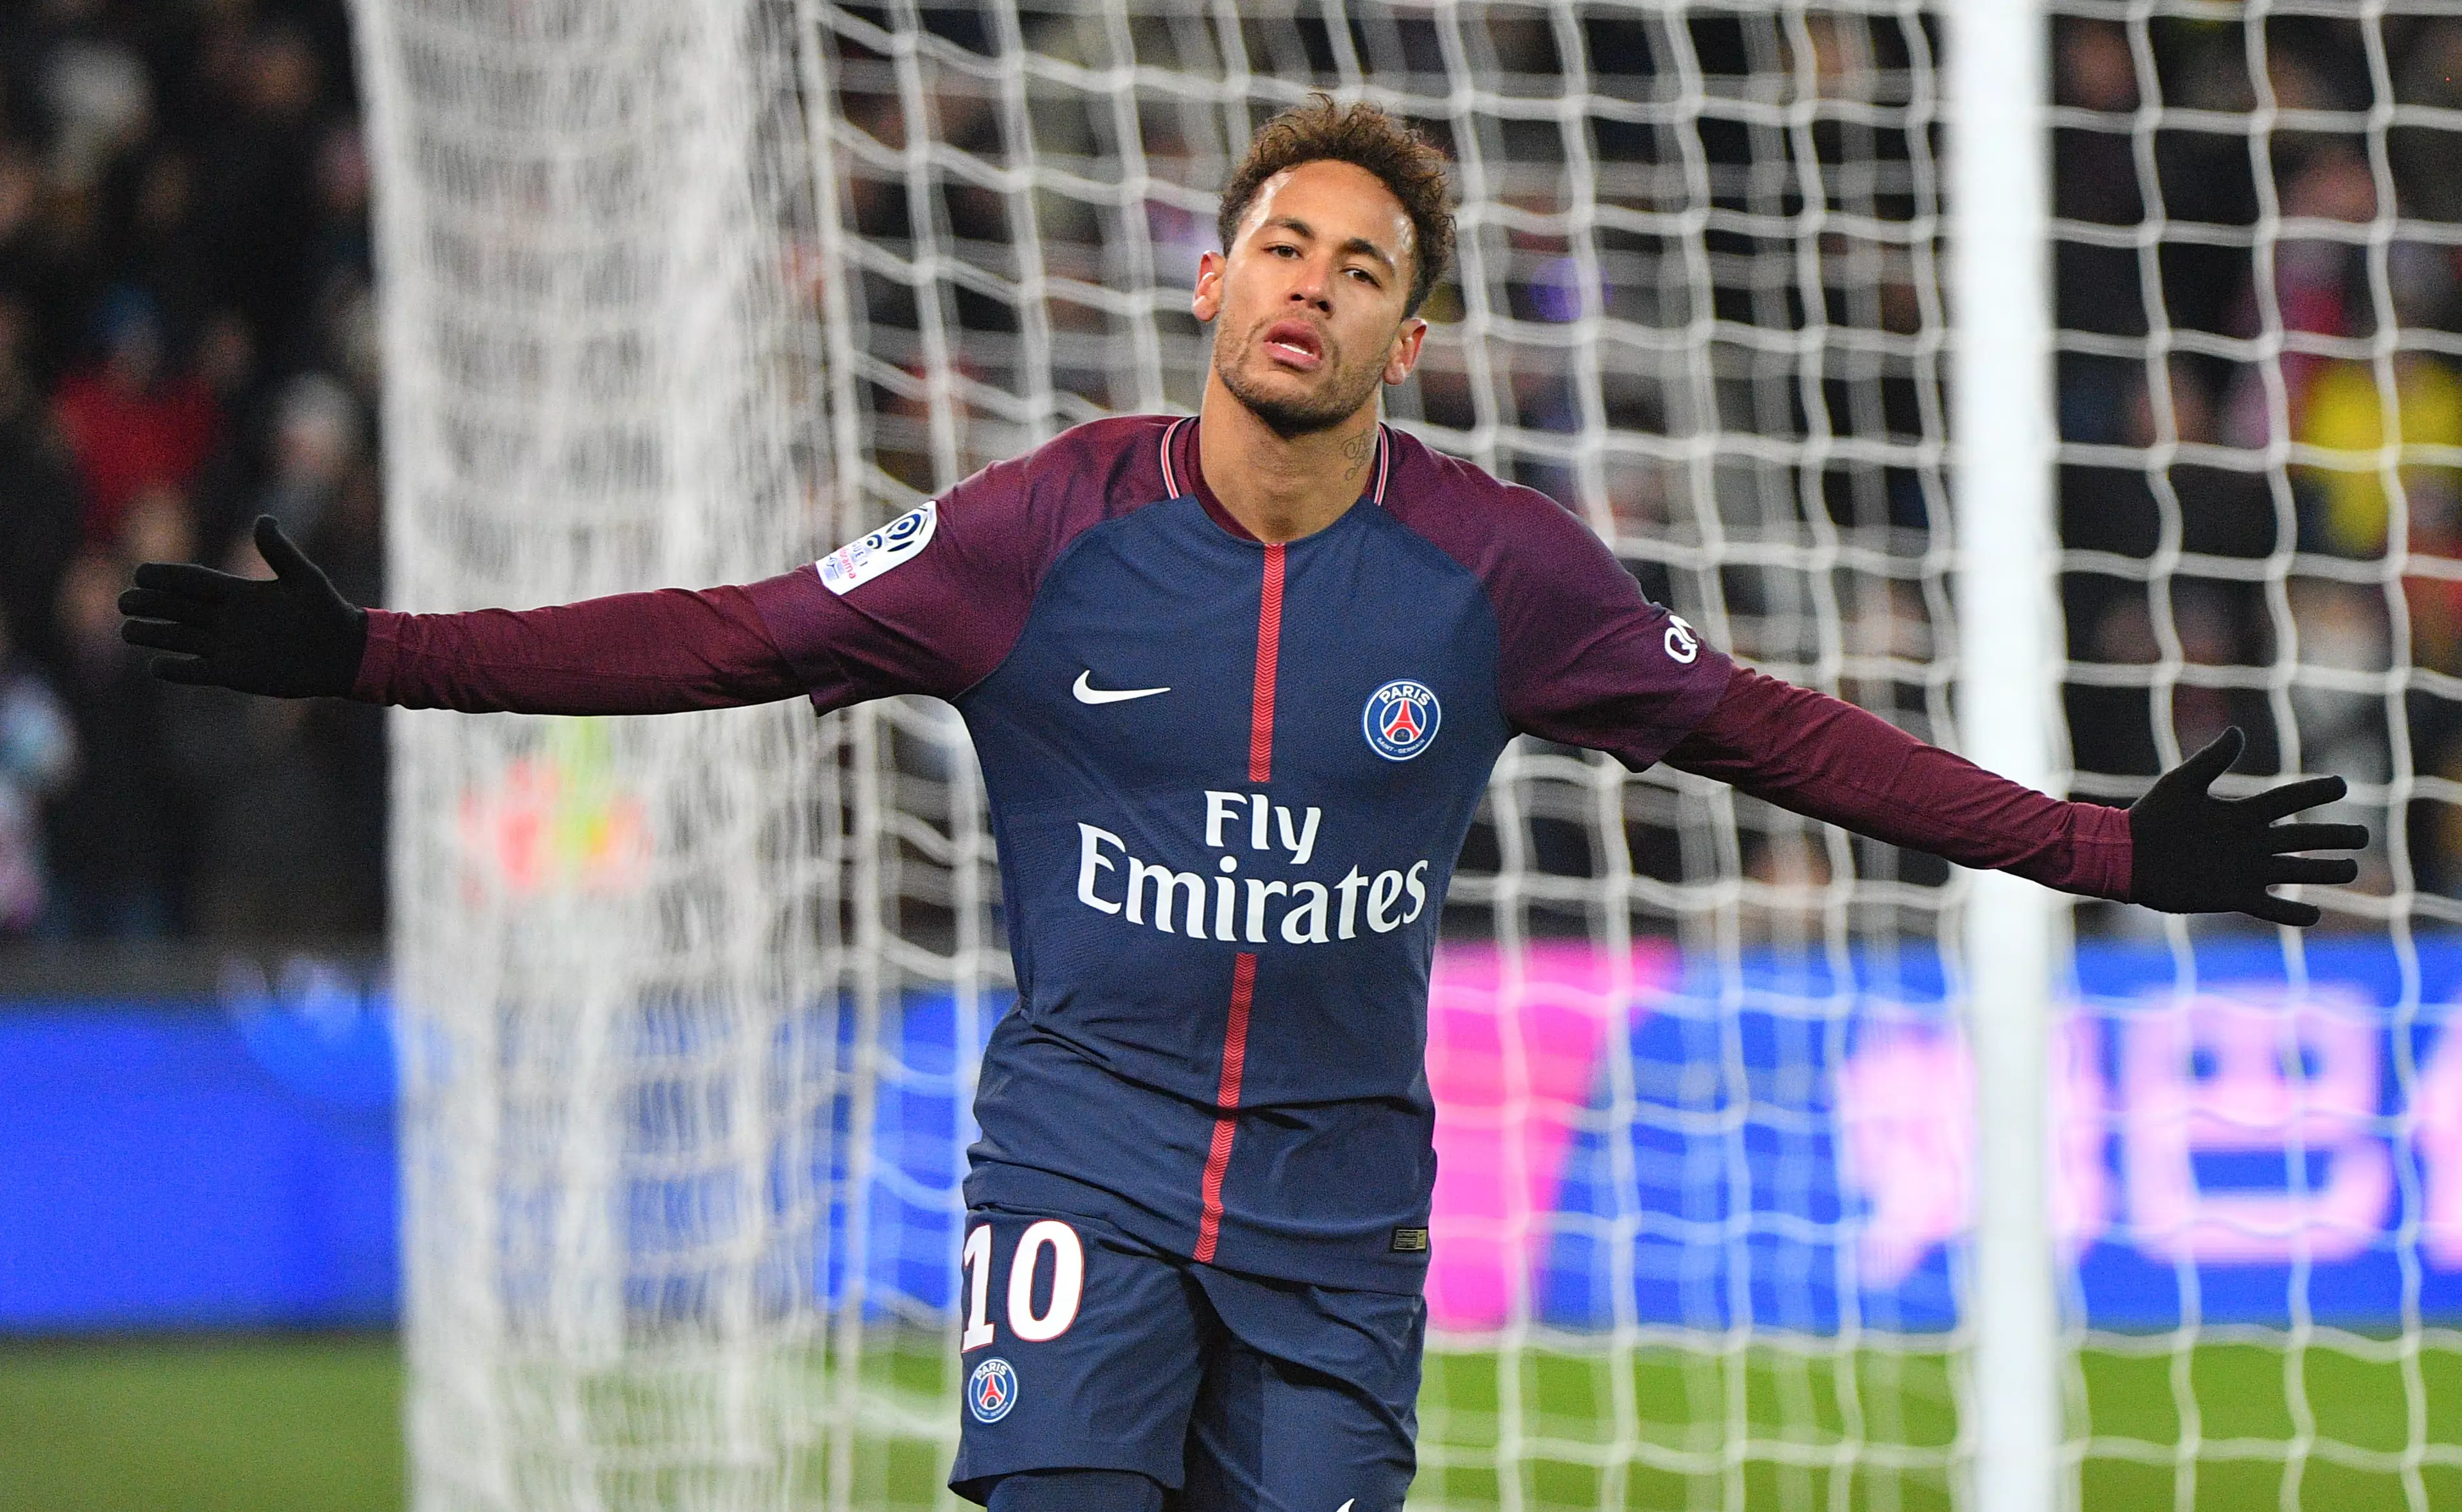 Neymar celebrates scoring a goal for PSG. Image: PA